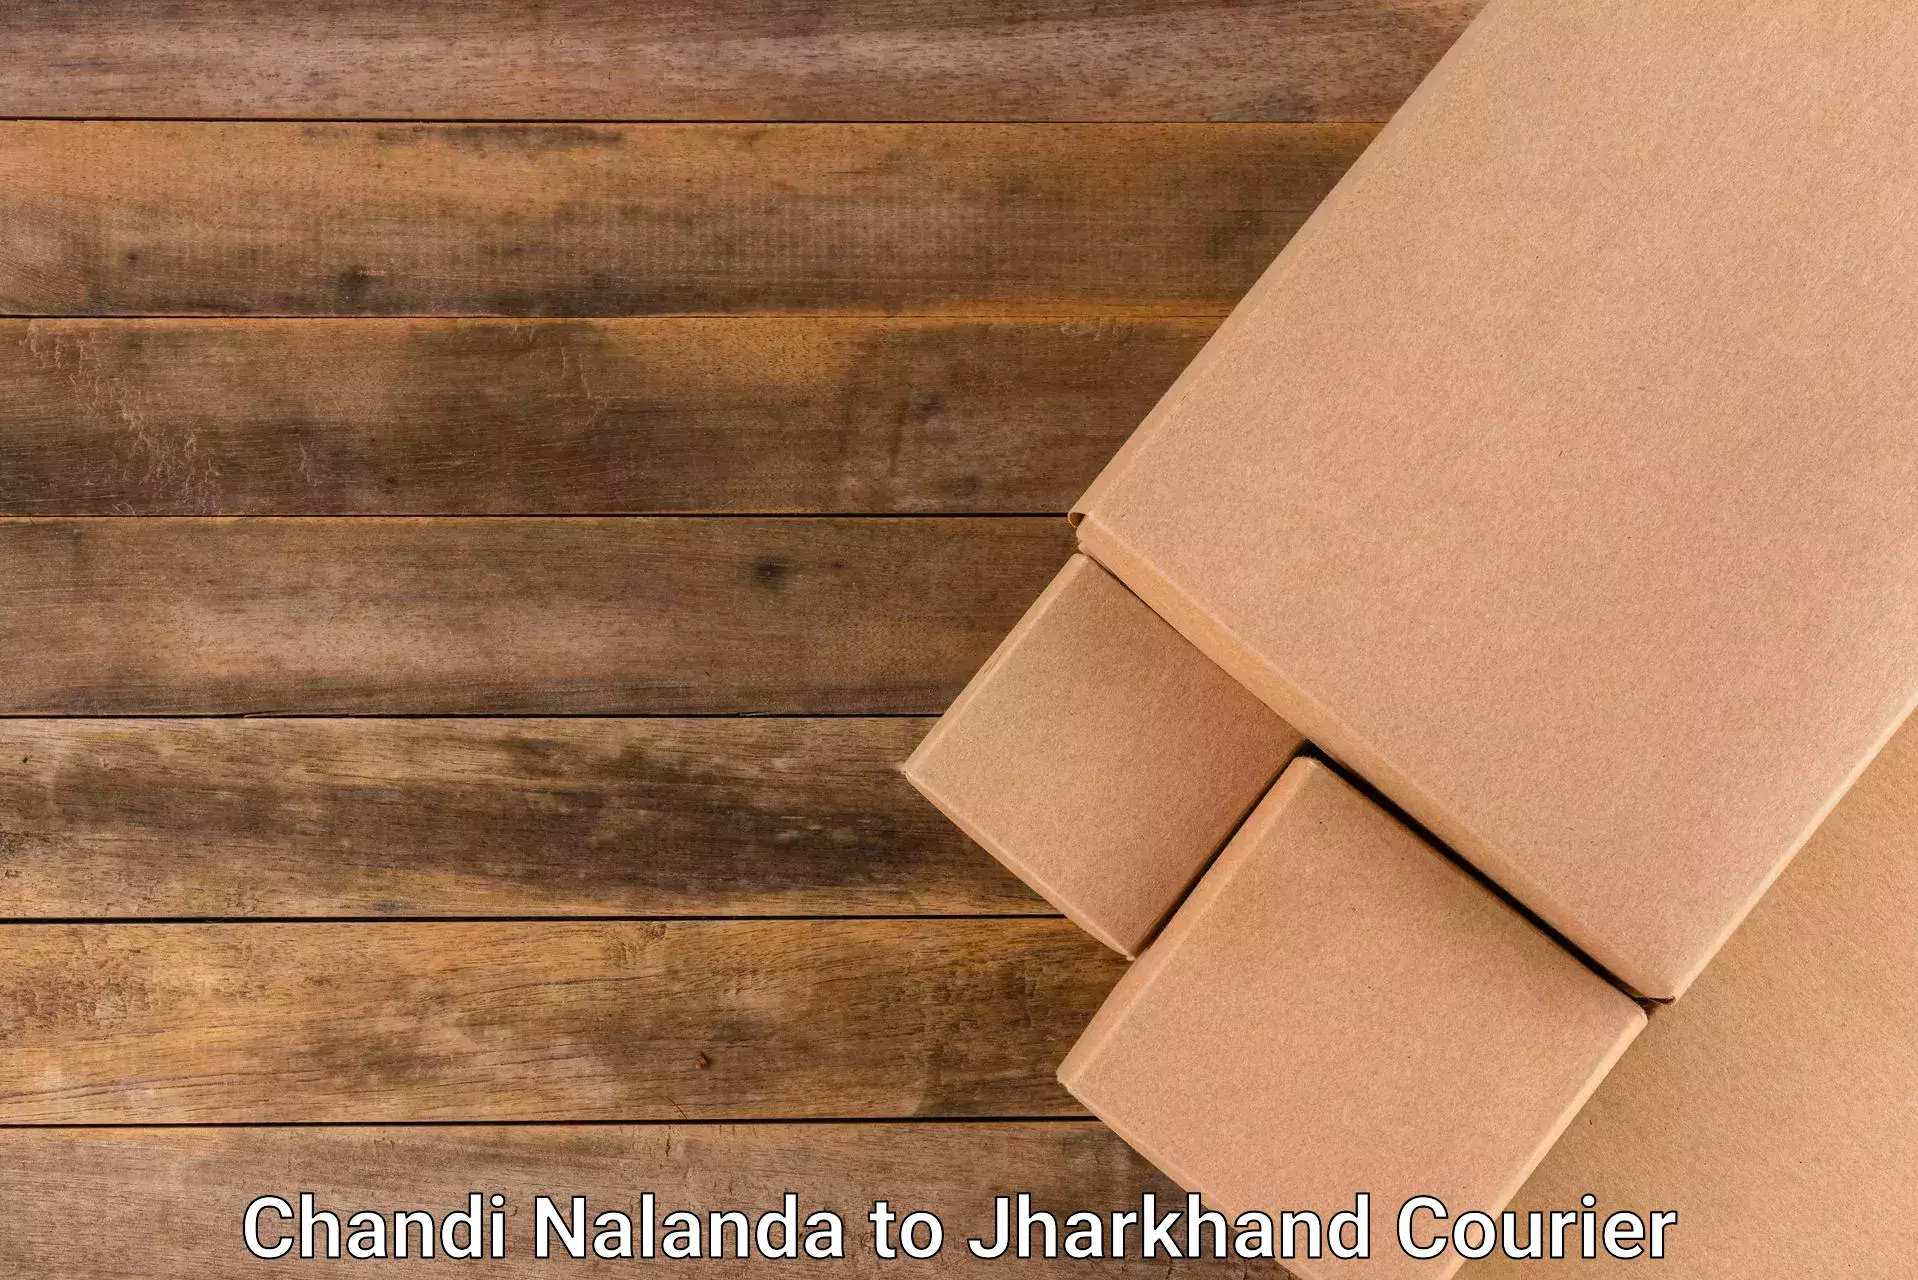 Express delivery solutions Chandi Nalanda to Seraikela Kharsawan